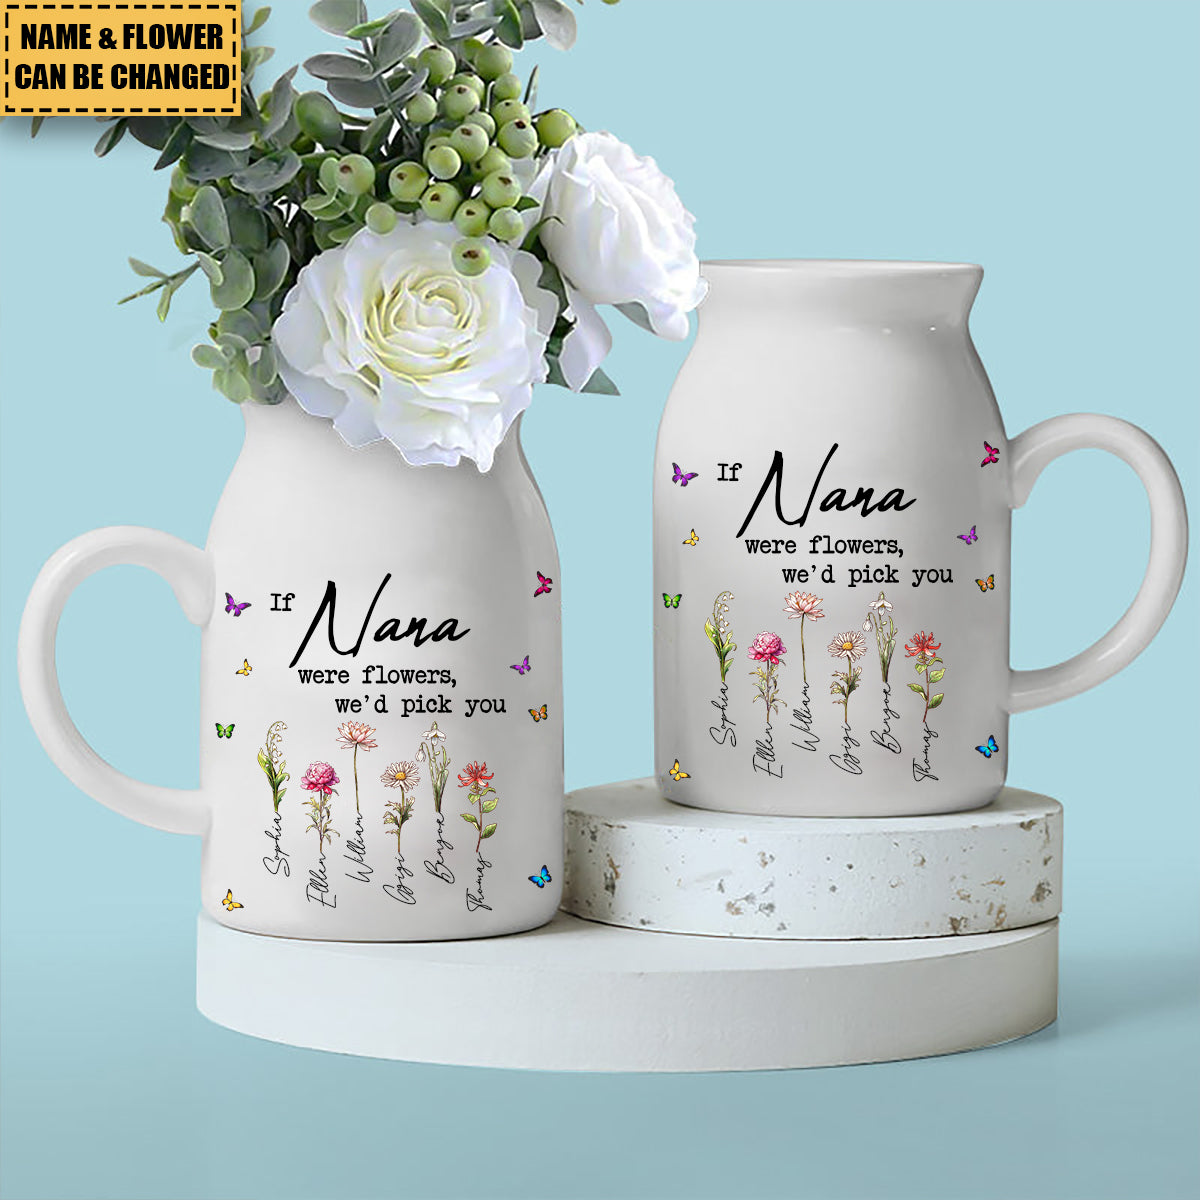 Grandma's Love Brings Blossoms To Life - Family Personalized Custom Home Decor Flower Vase - House Warming Gift For Mom, Grandma